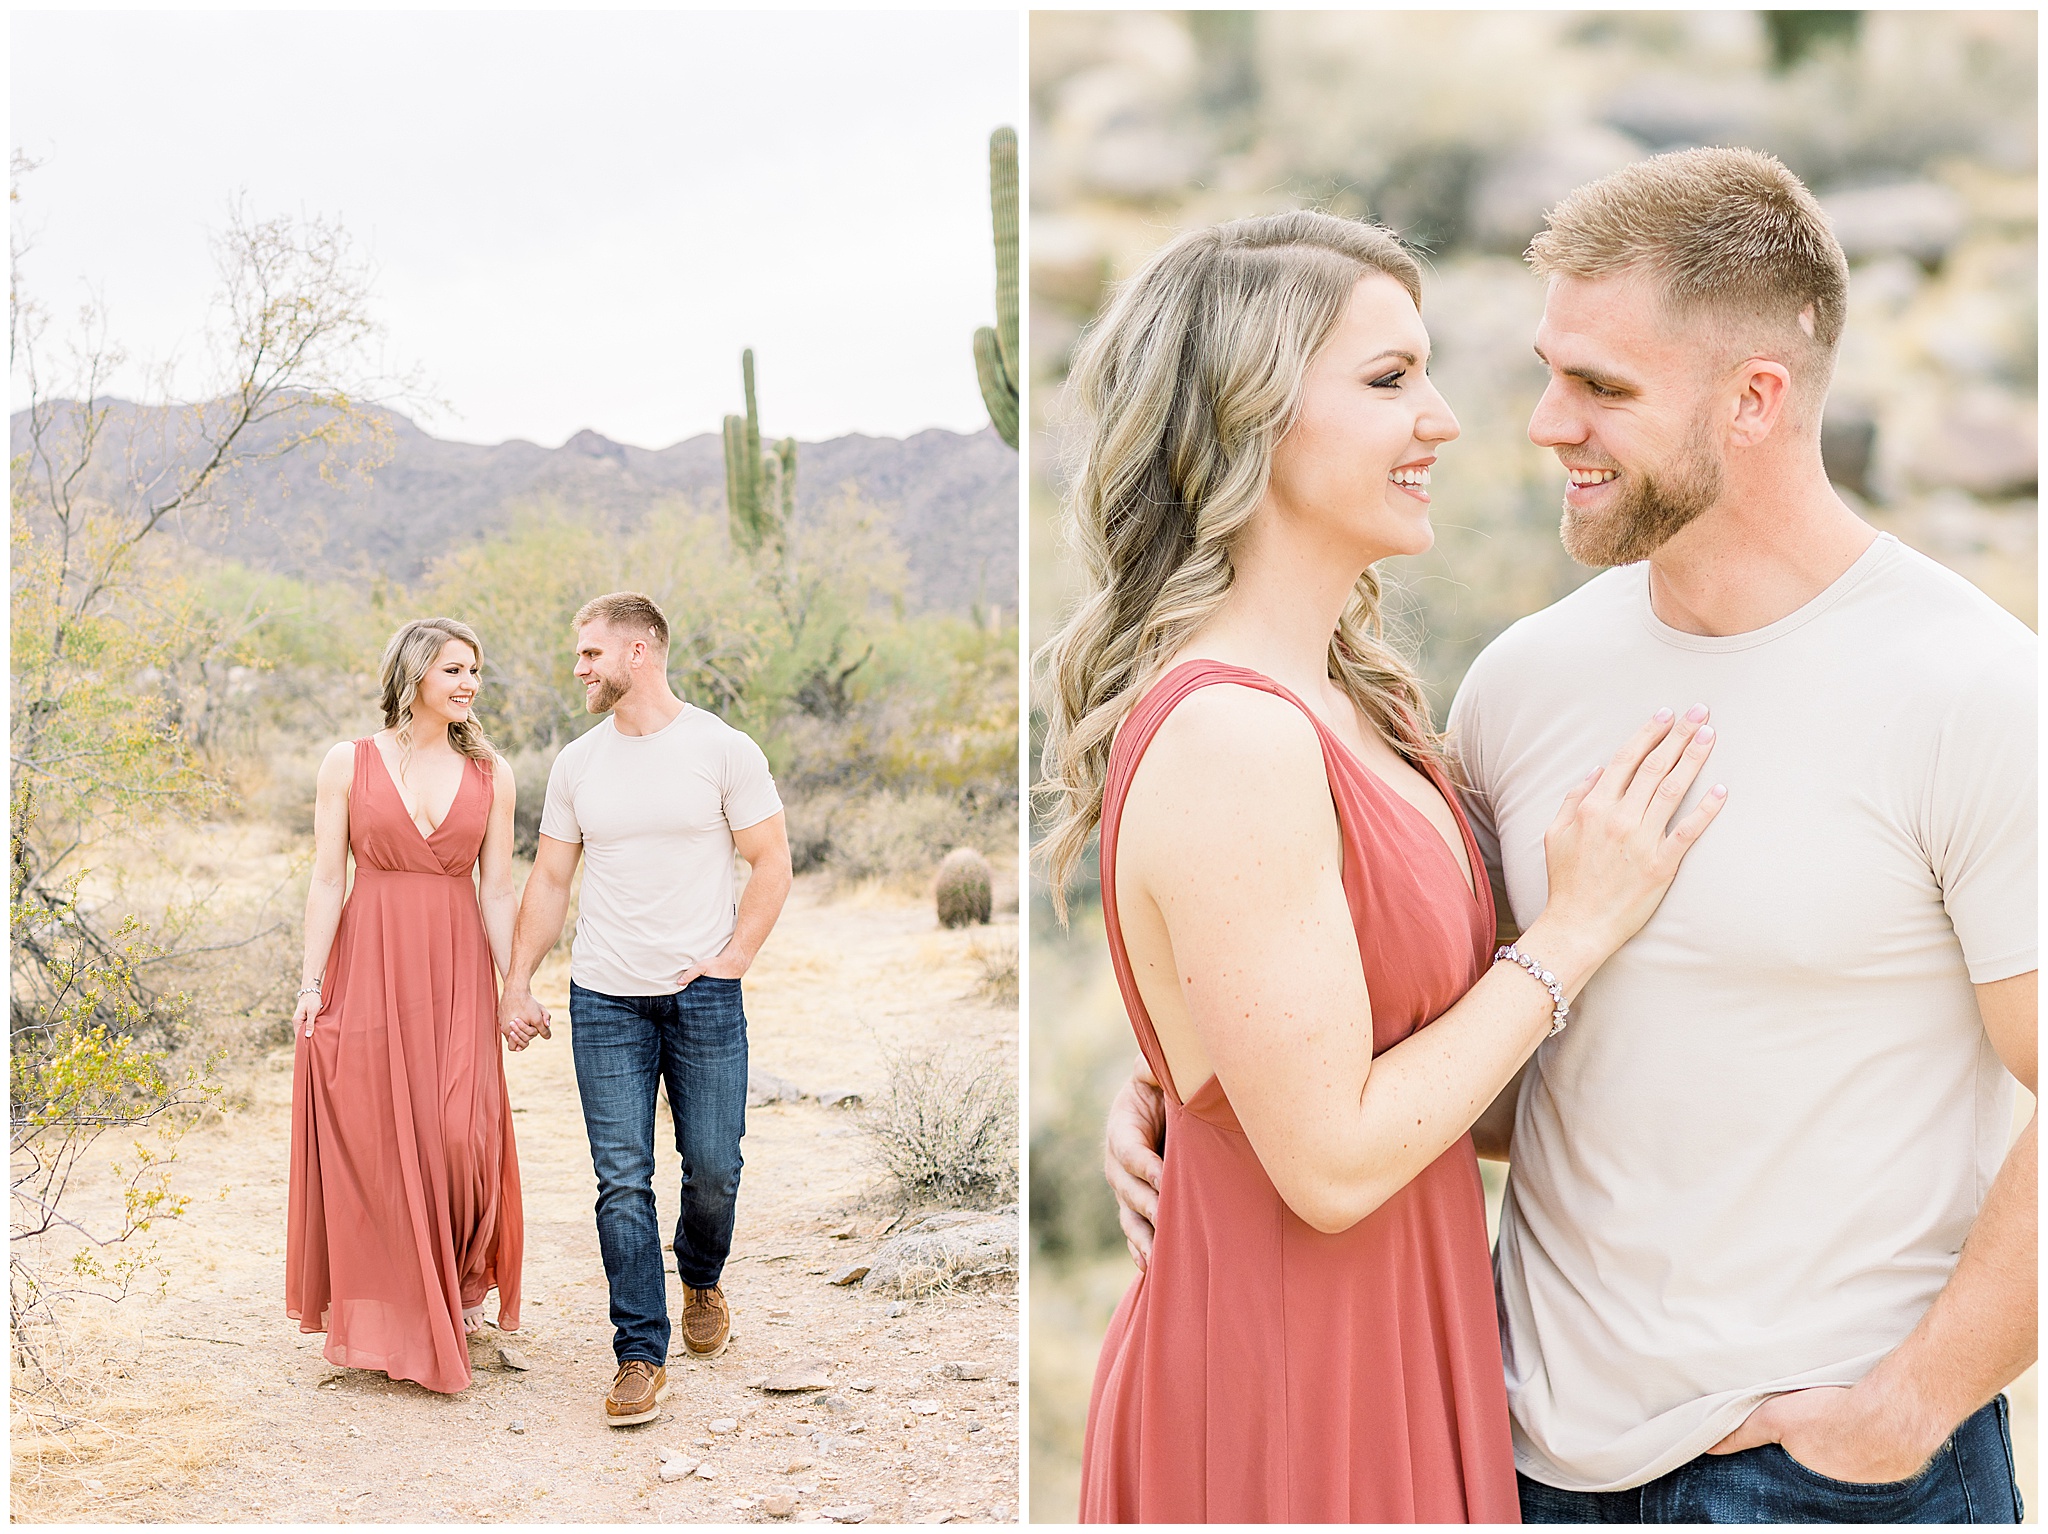 Desert Engagement Session, Couple walking, Dusty Rose Dress, Lulu's Dress